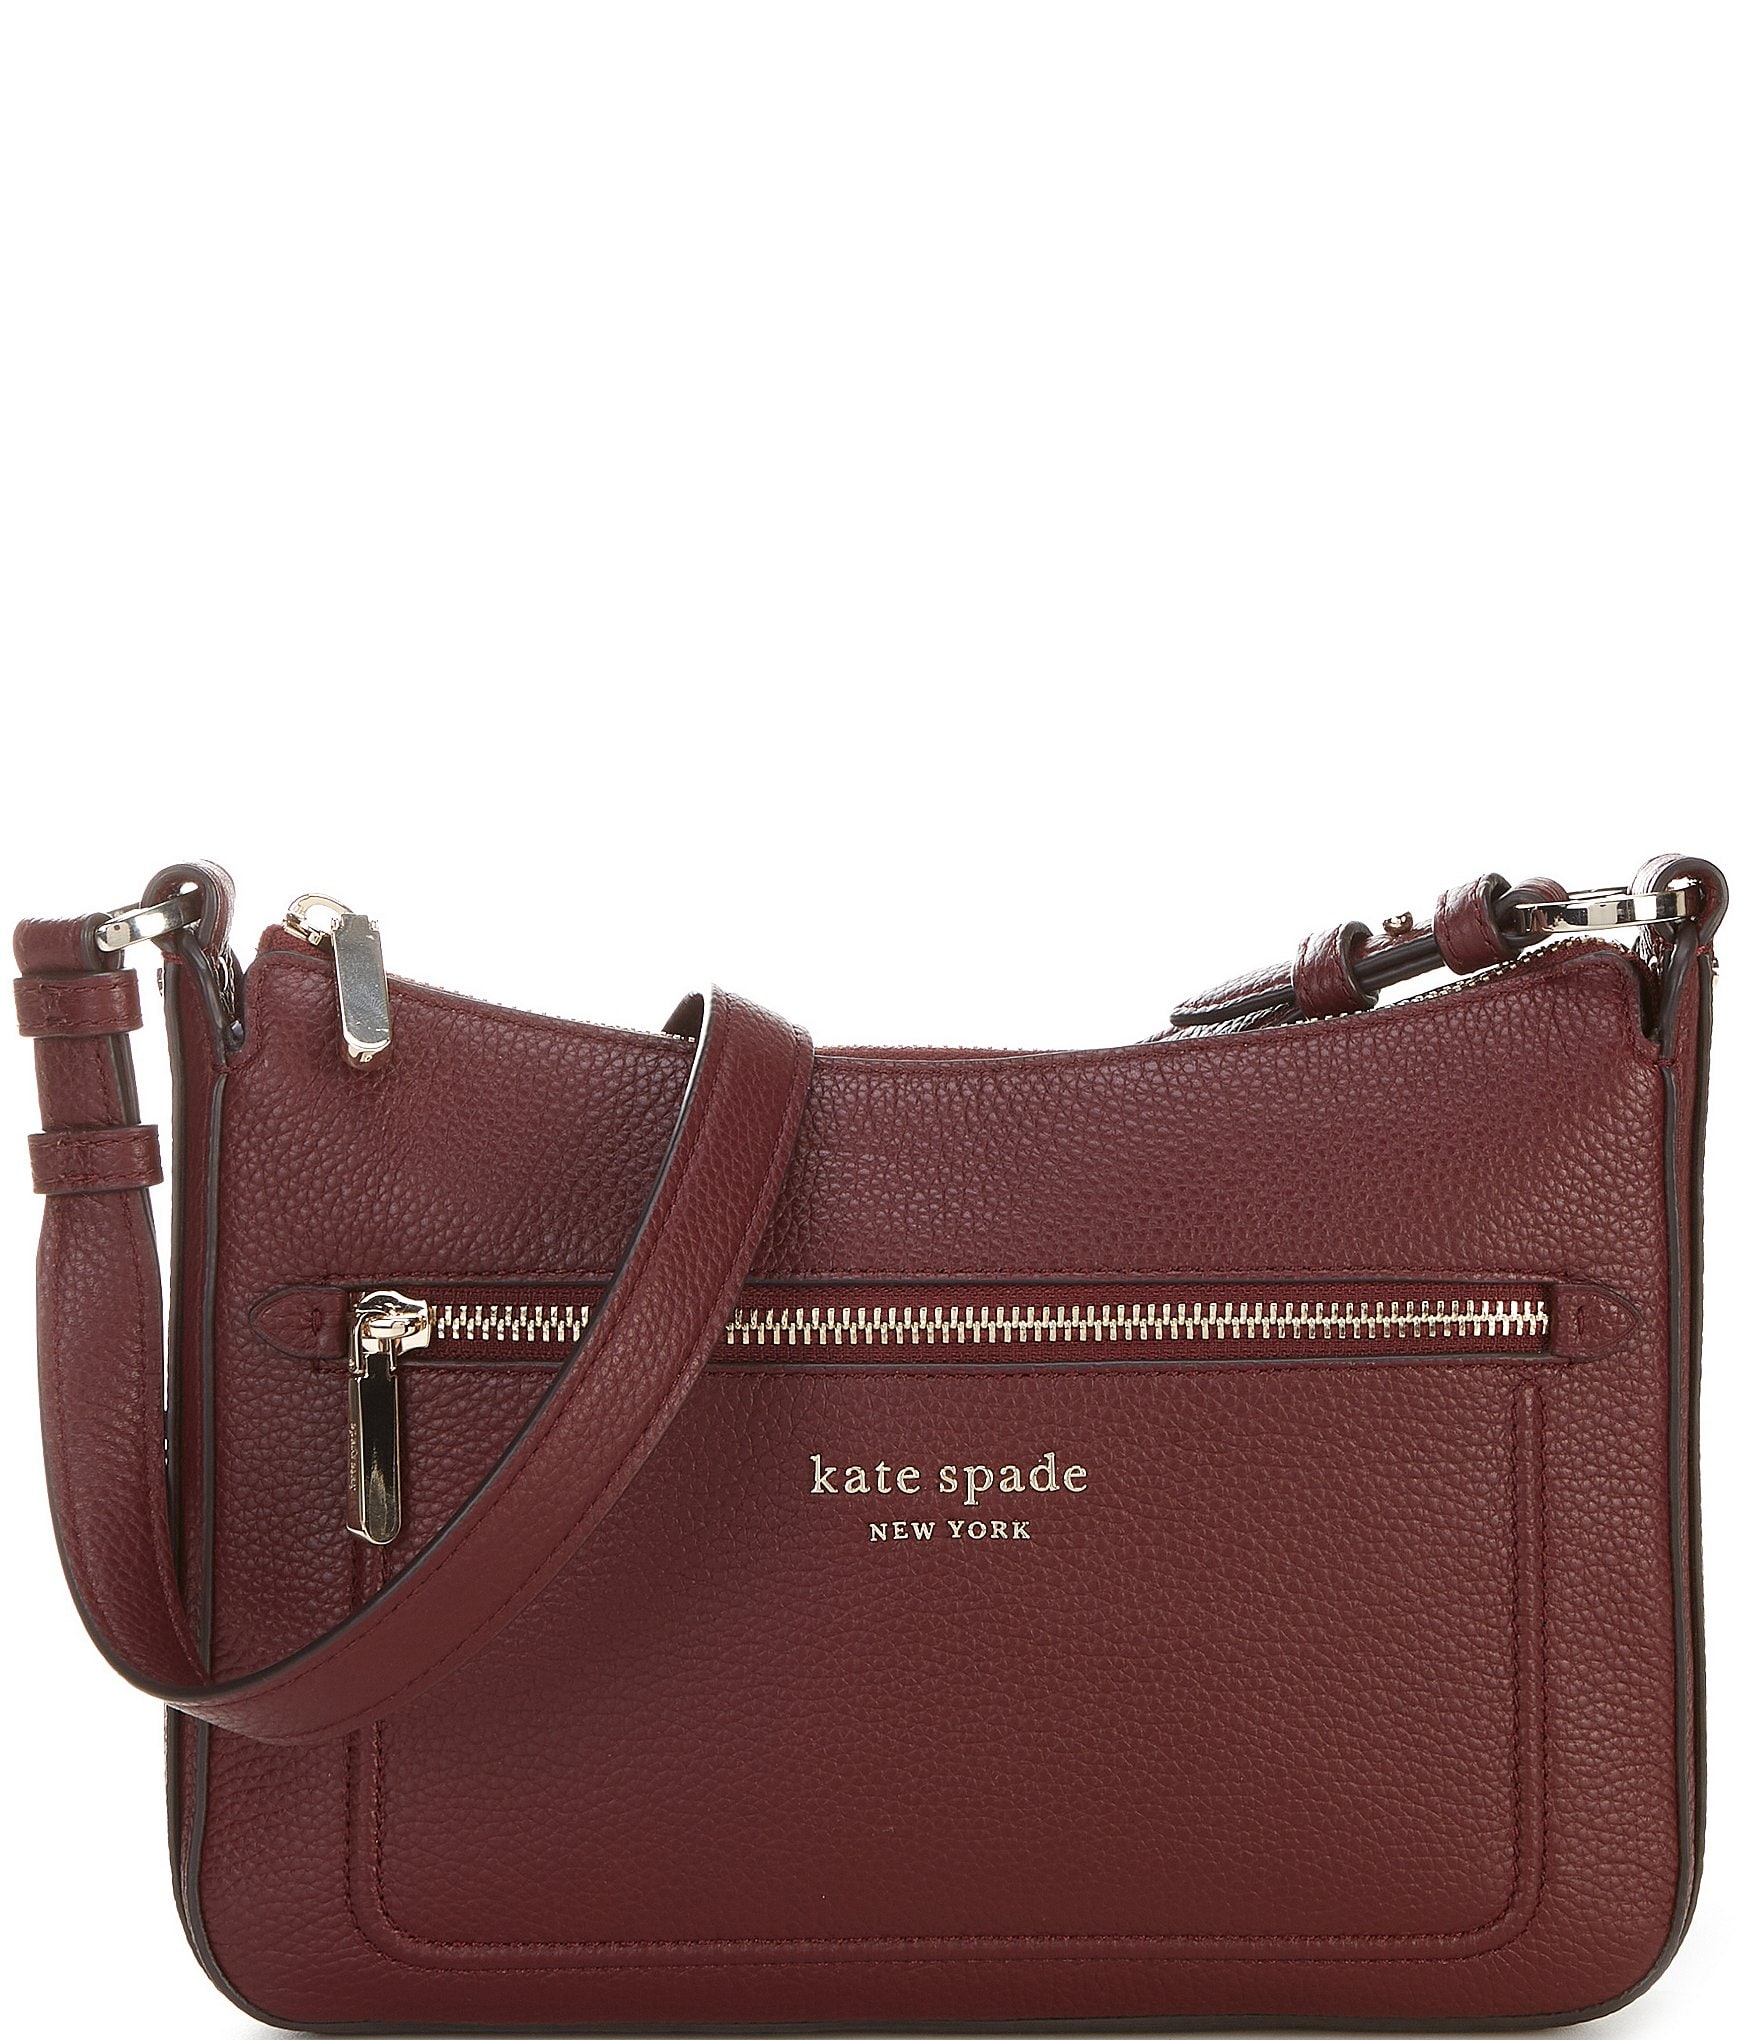 kate spade new york Women's Crossbody Bags